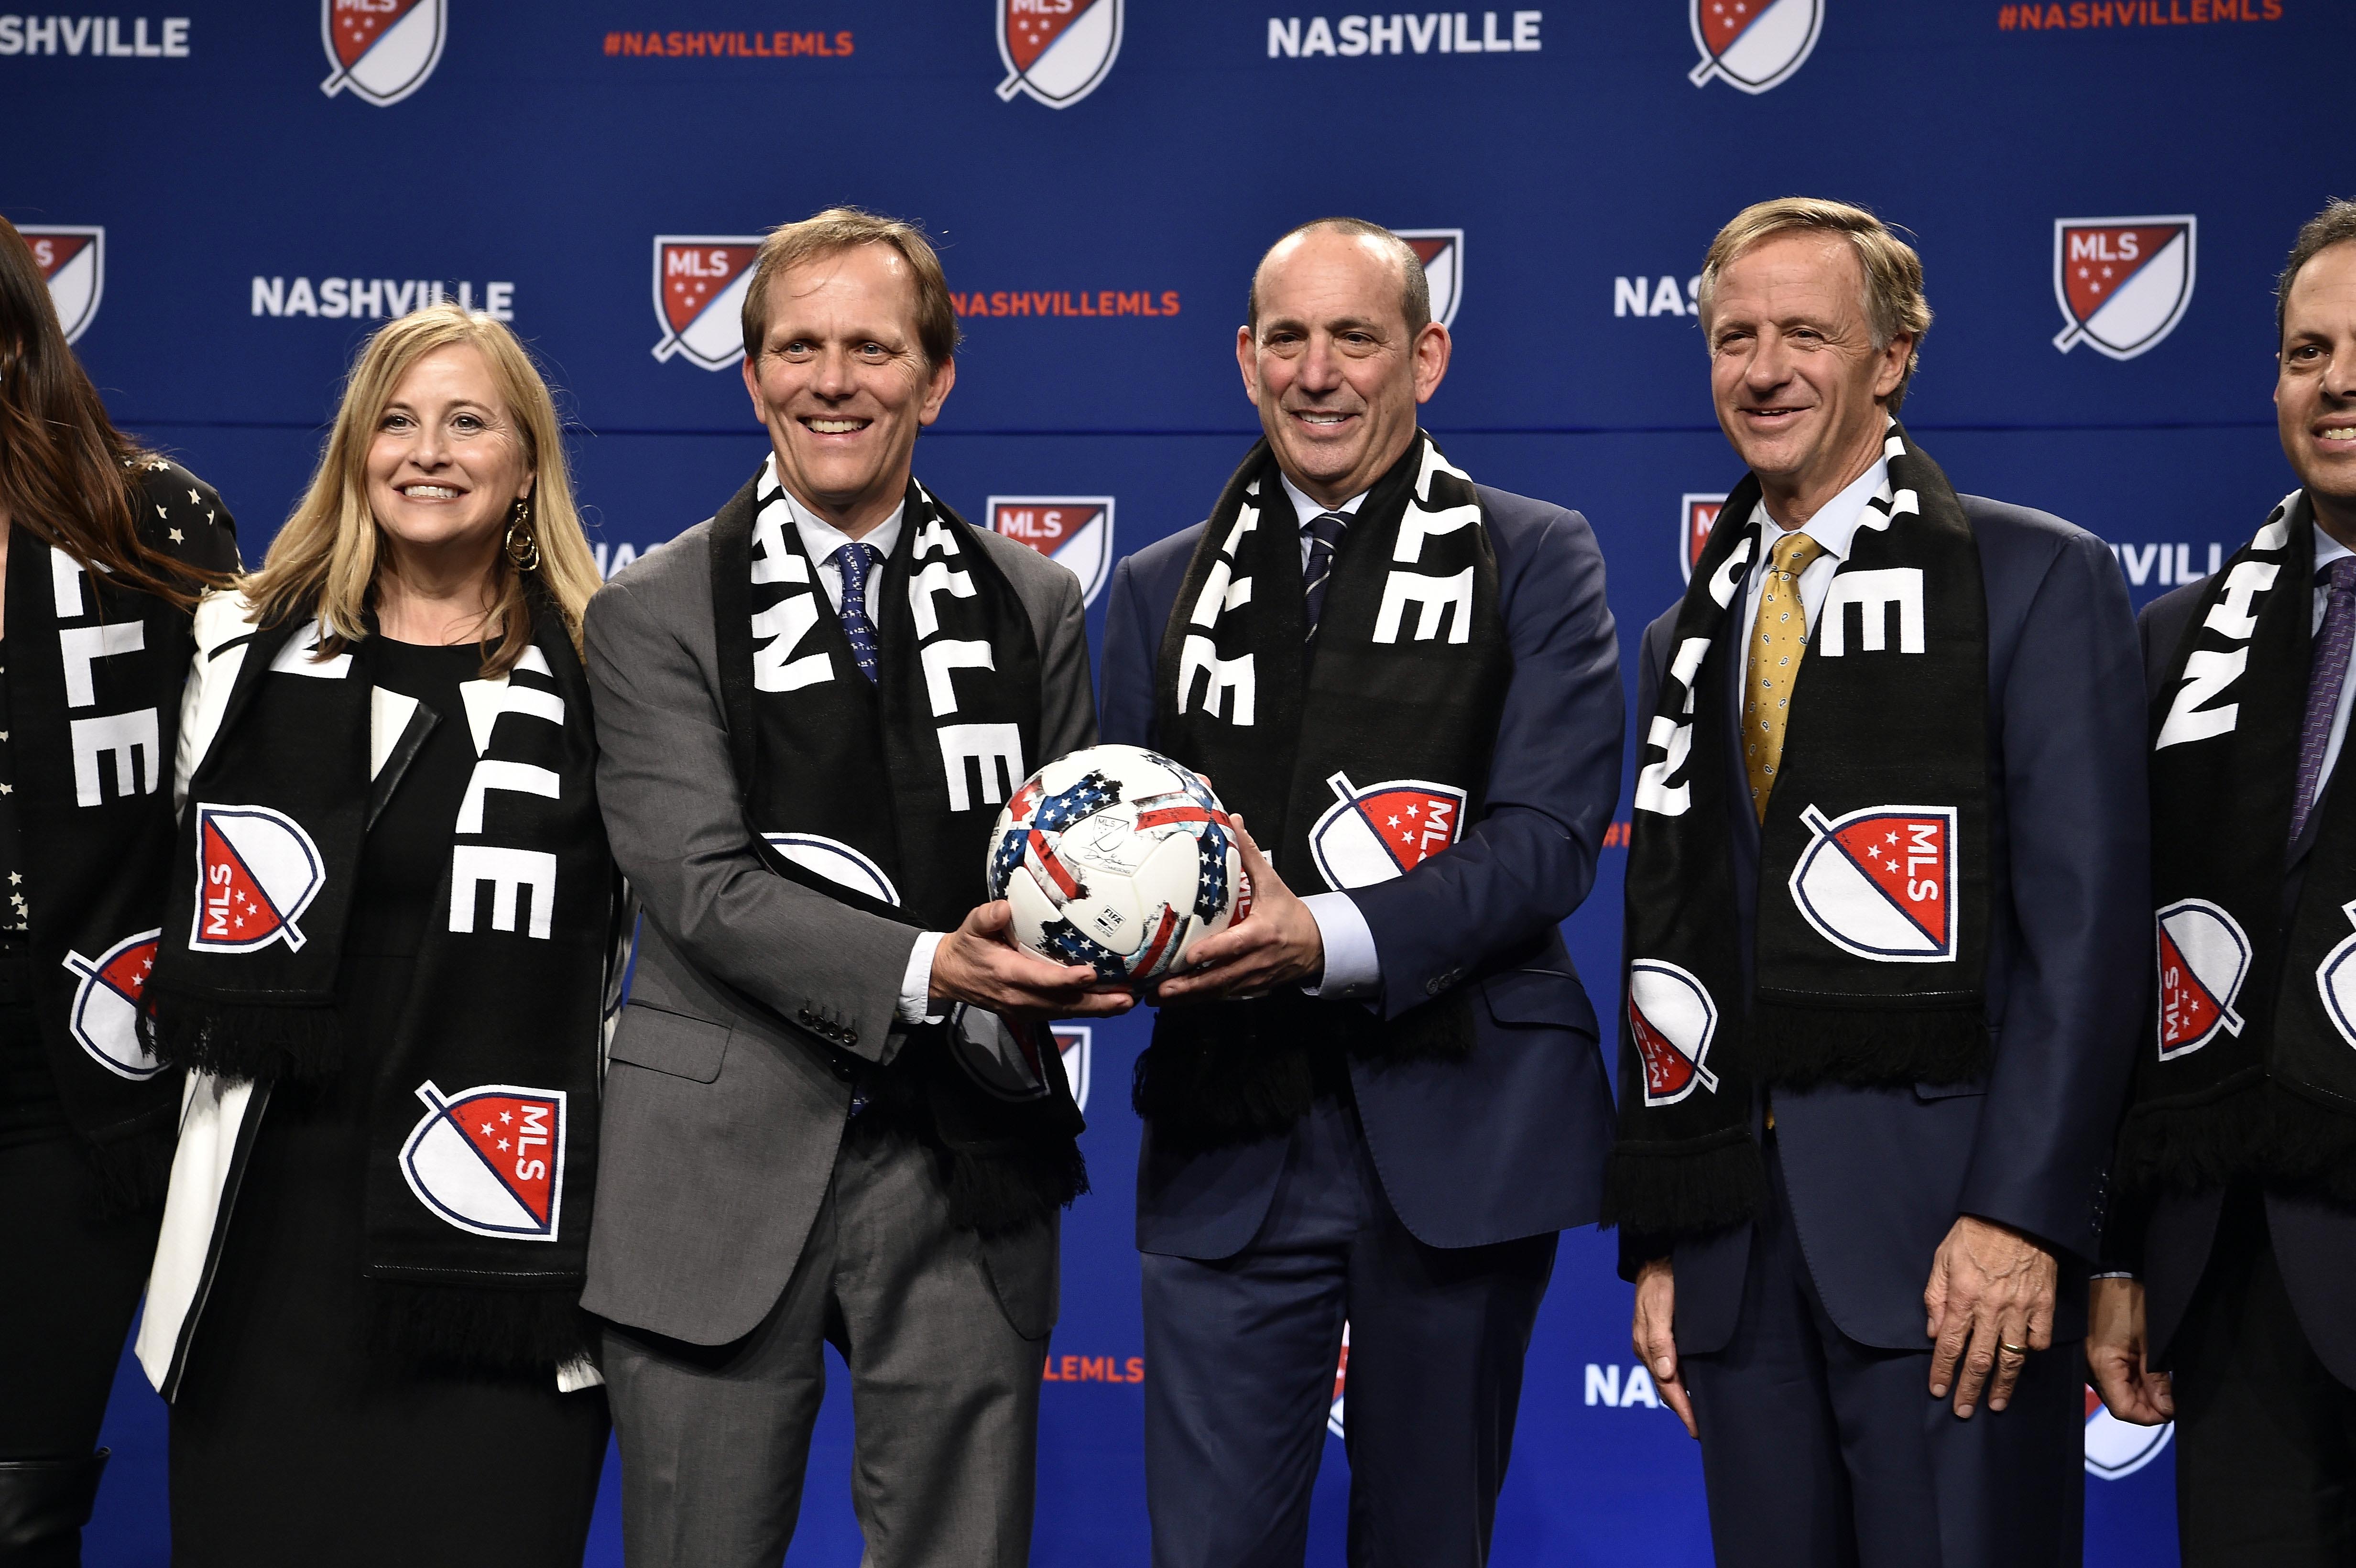 MLS: MLS Press Conference